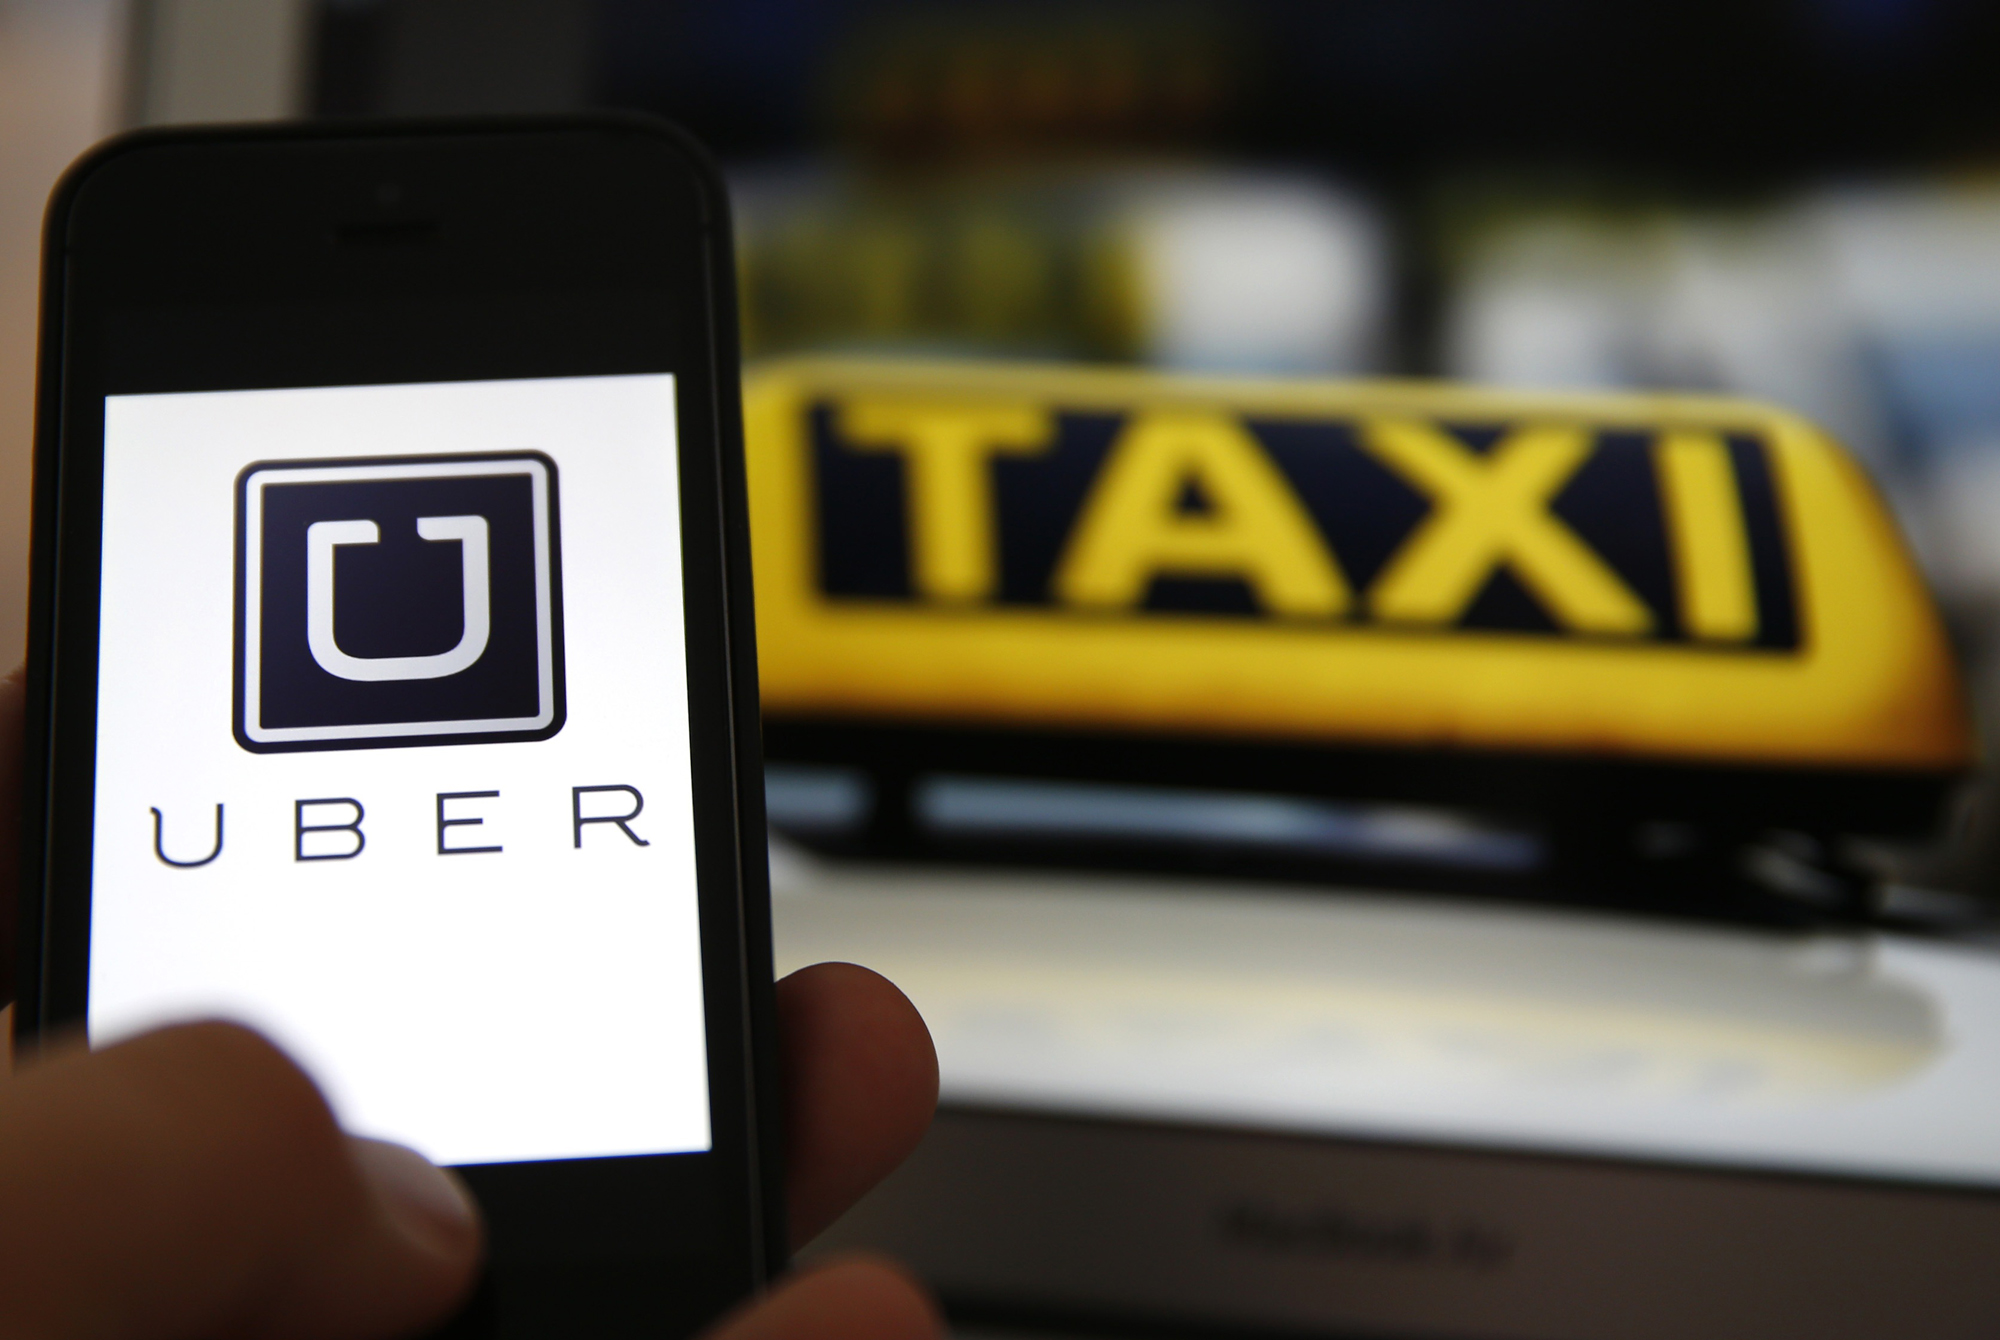 Taiwán prohíbe funcionamiento a Uber